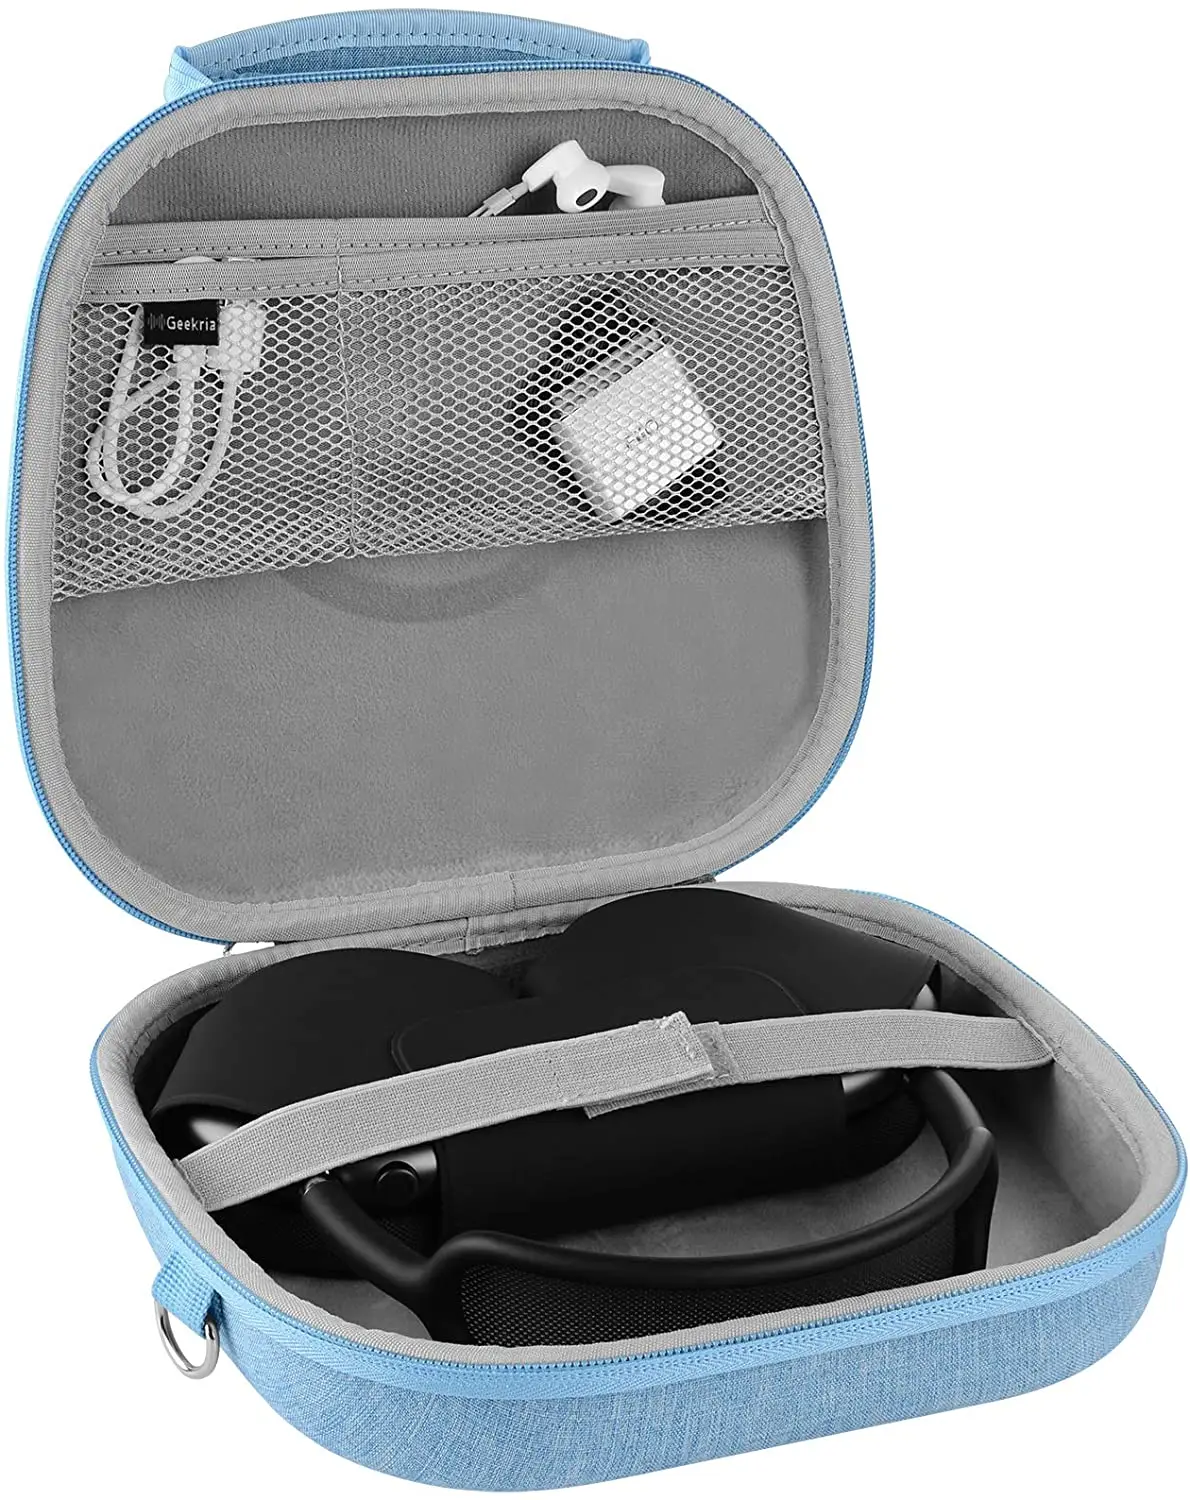 Geekria Headphones Case For AirPod Max Headphones Case, Hard Portable Bluetooth Earphones Headset Bag For Accessories Storage enlarge